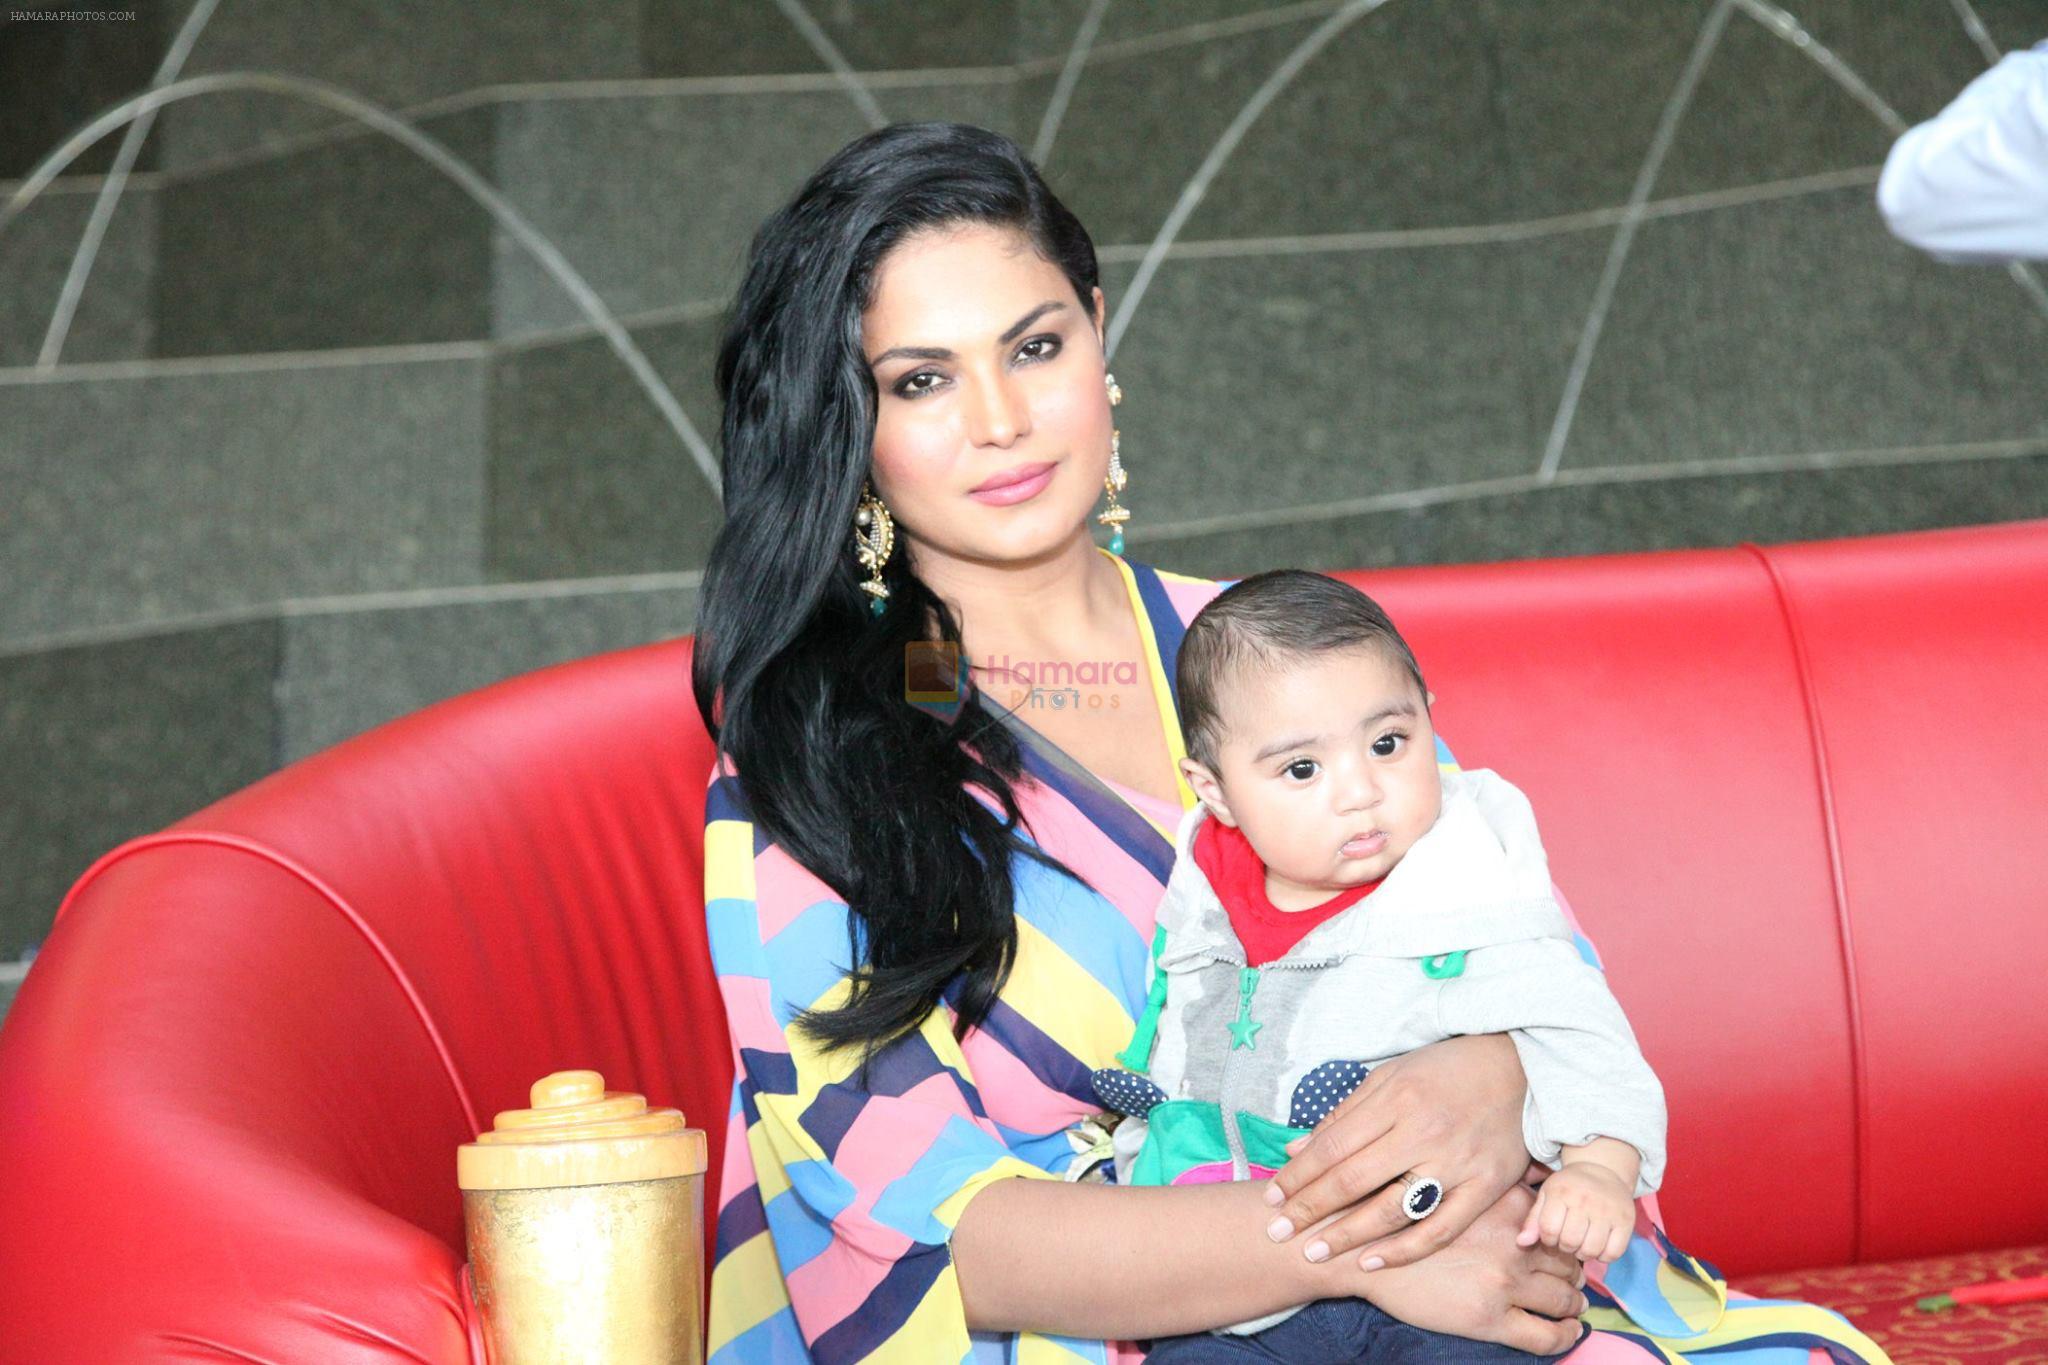 Veena Malik celebrated her birthday in Dubai on 28th Feb 2015